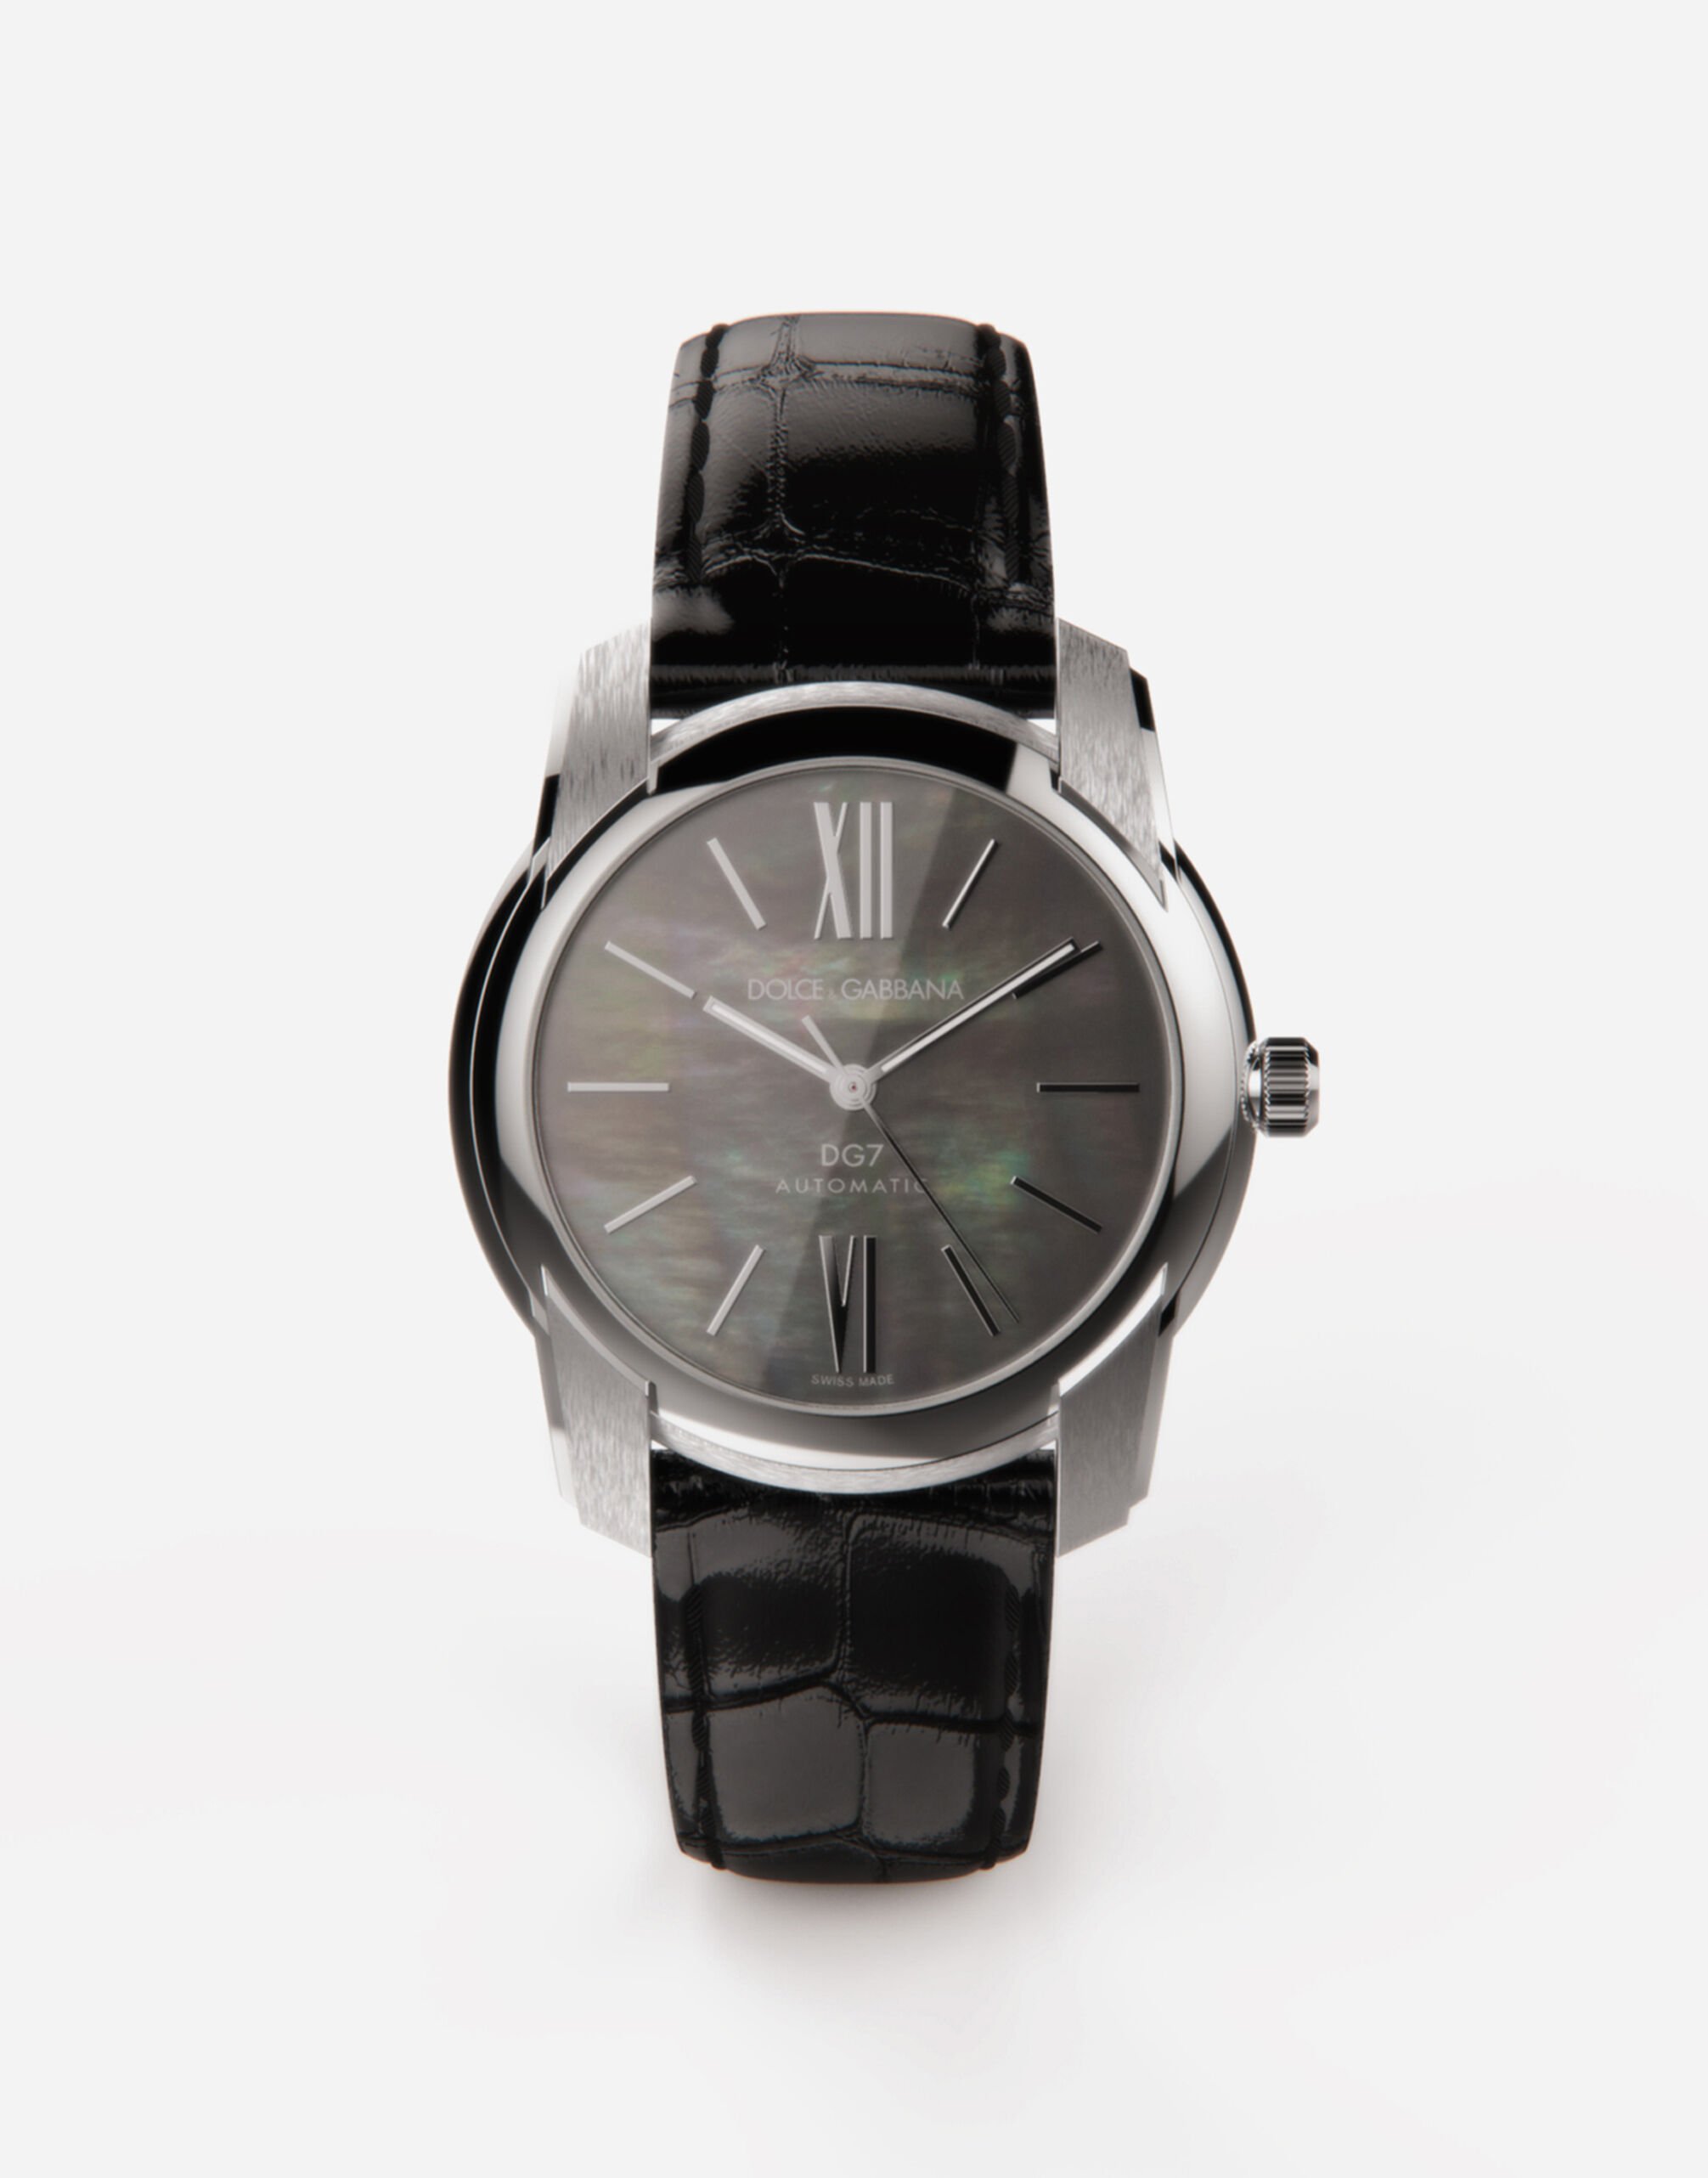 Dolce & Gabbana DG7 watch in steel with black mother of pearl Bordeaux WWEEGGWW045